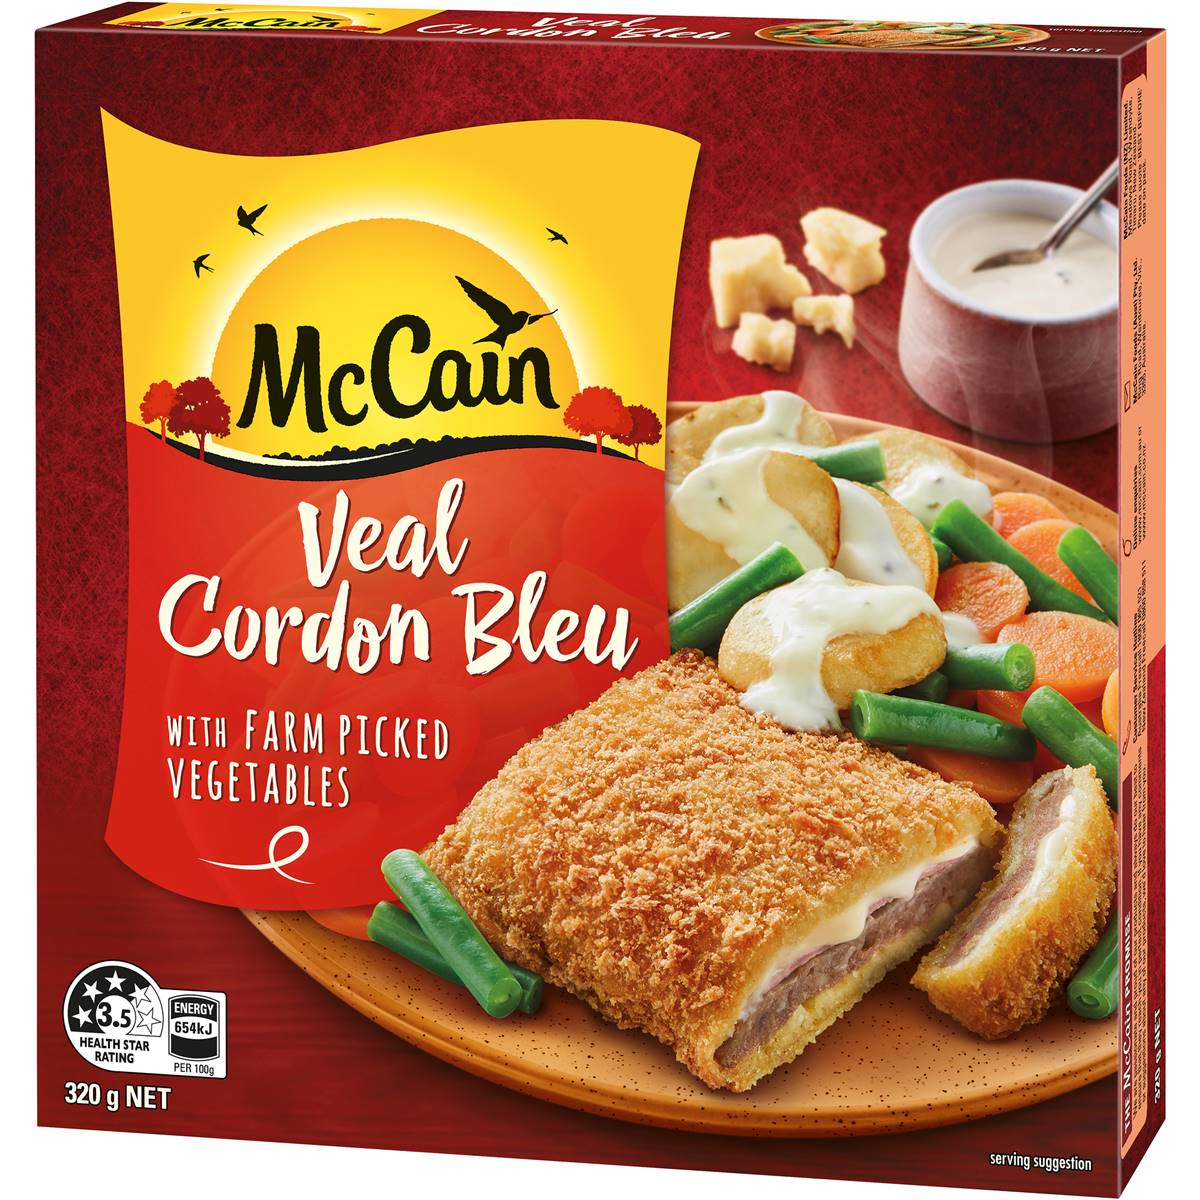 Calories in Mccain Dinner Veal Cordon Bleu